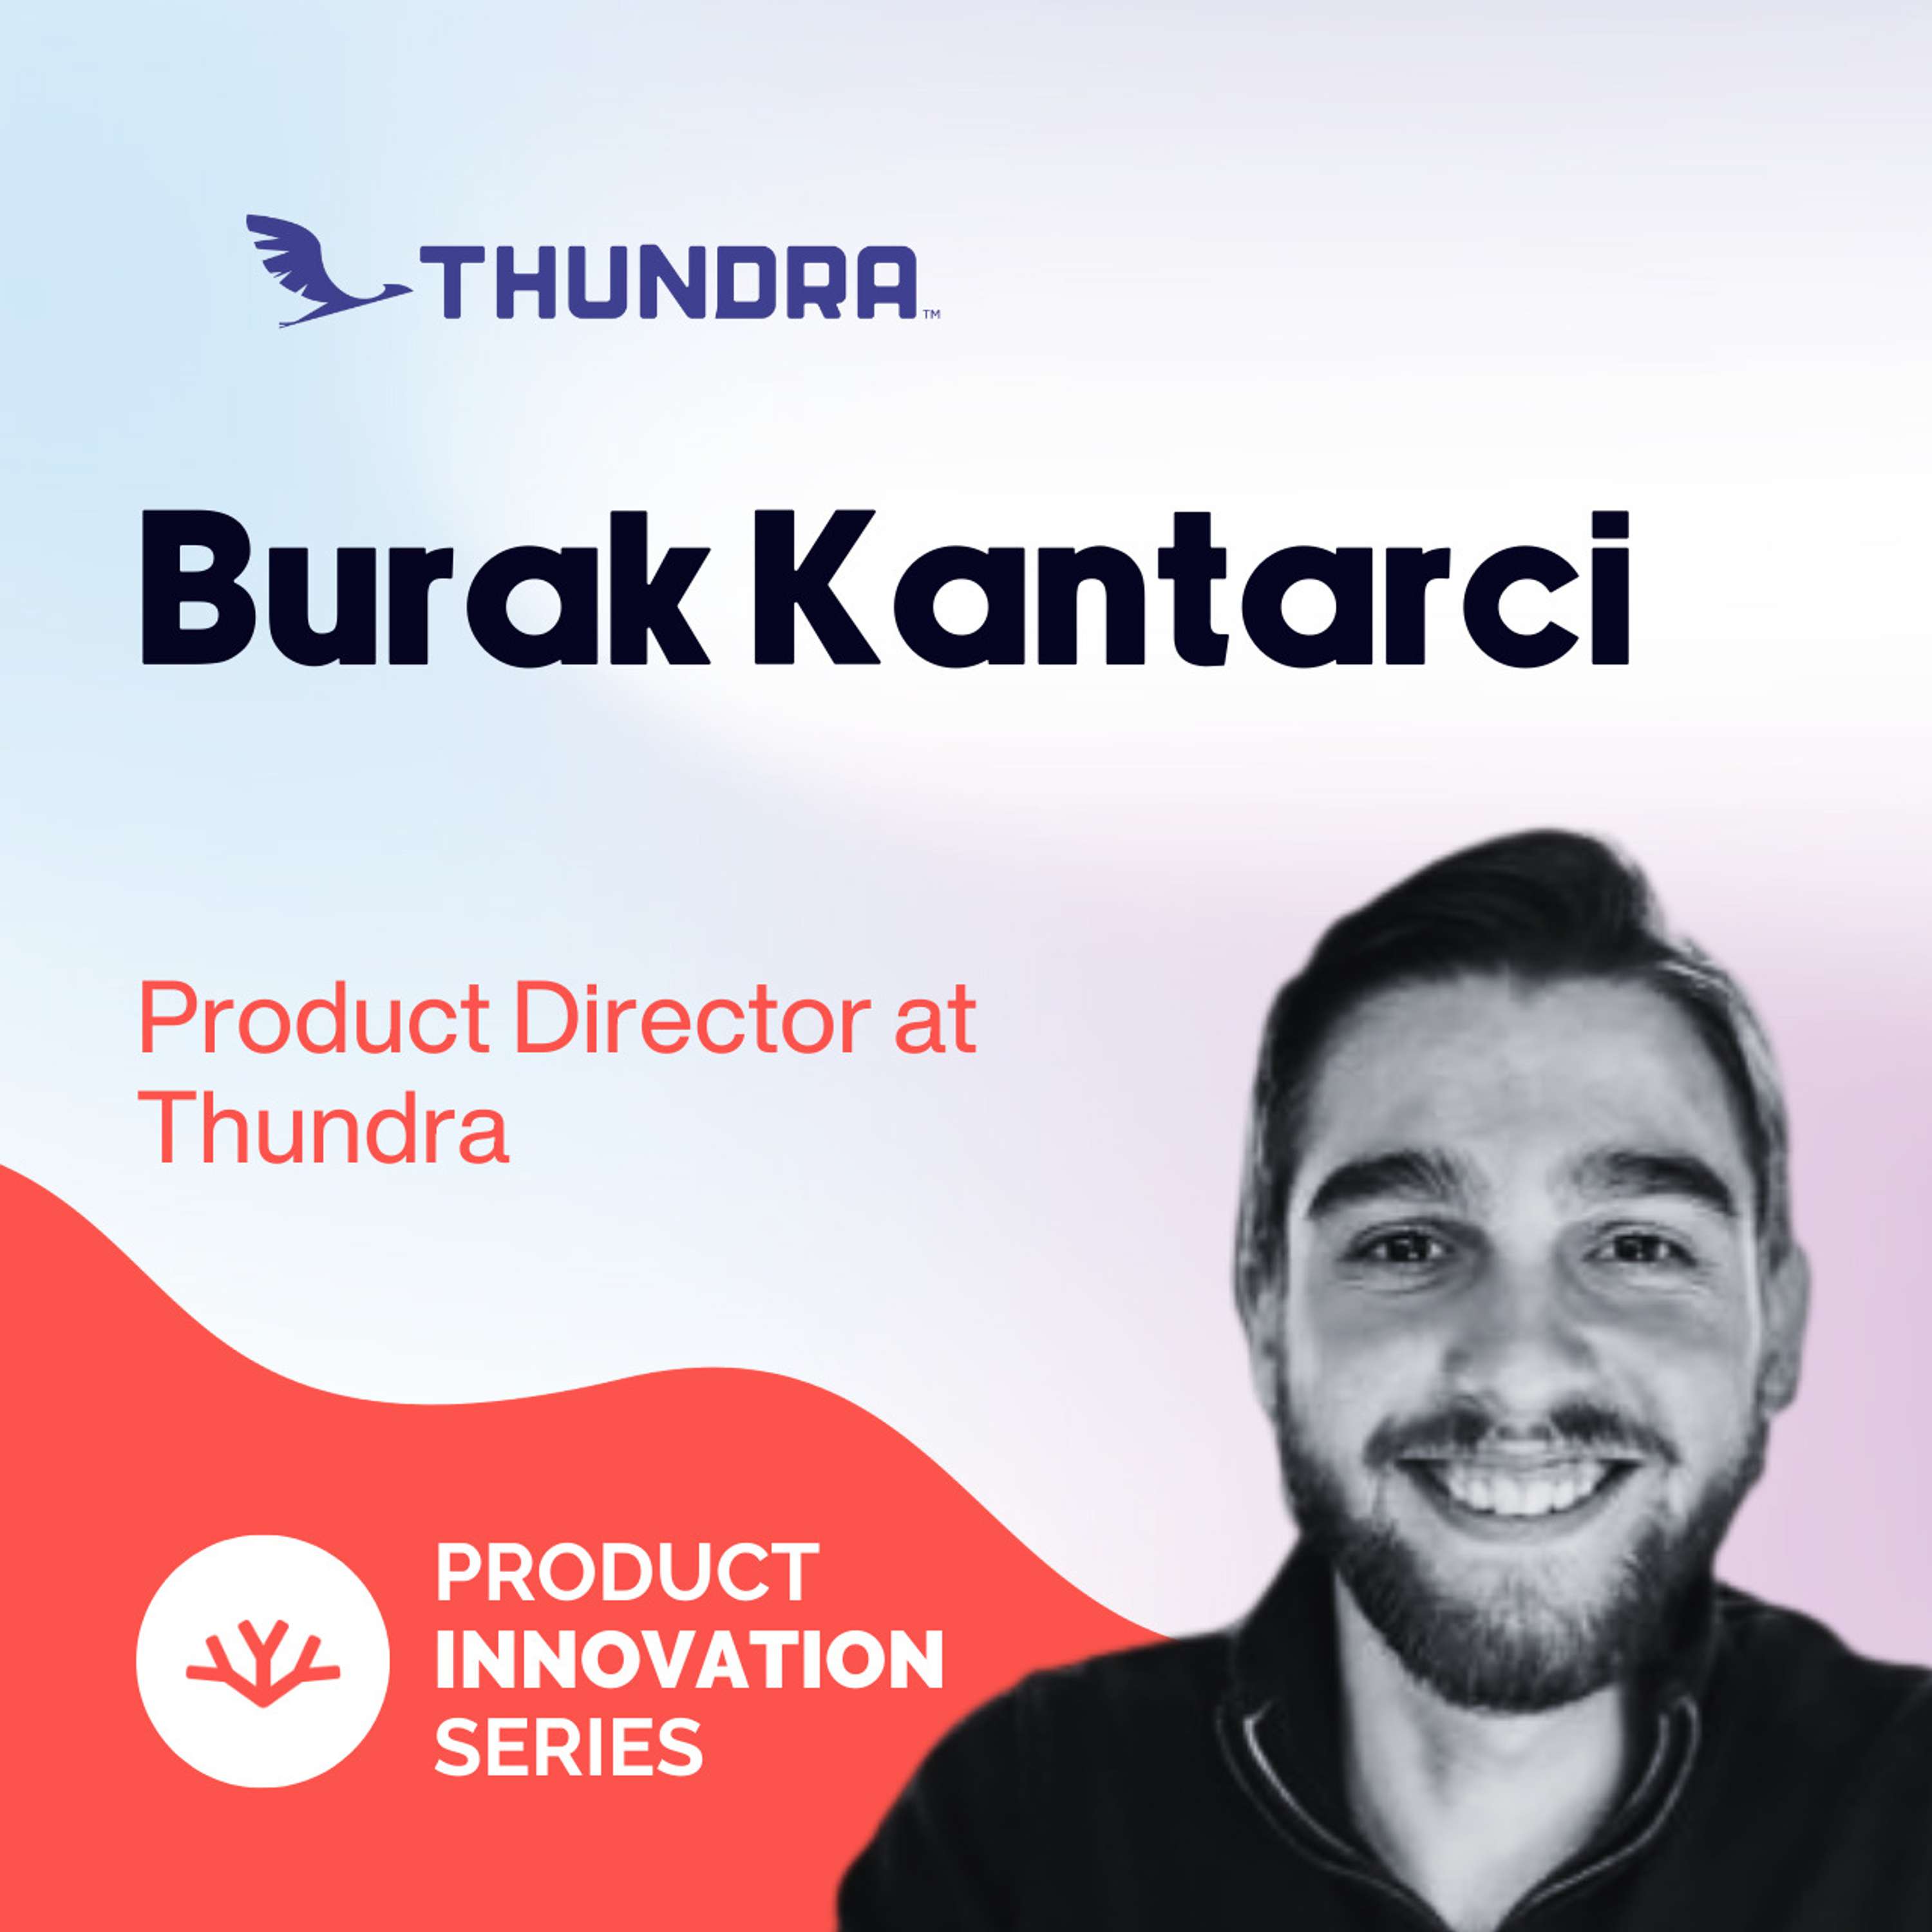 From Designer to Product Manager - Burak Kantarci, Thundra